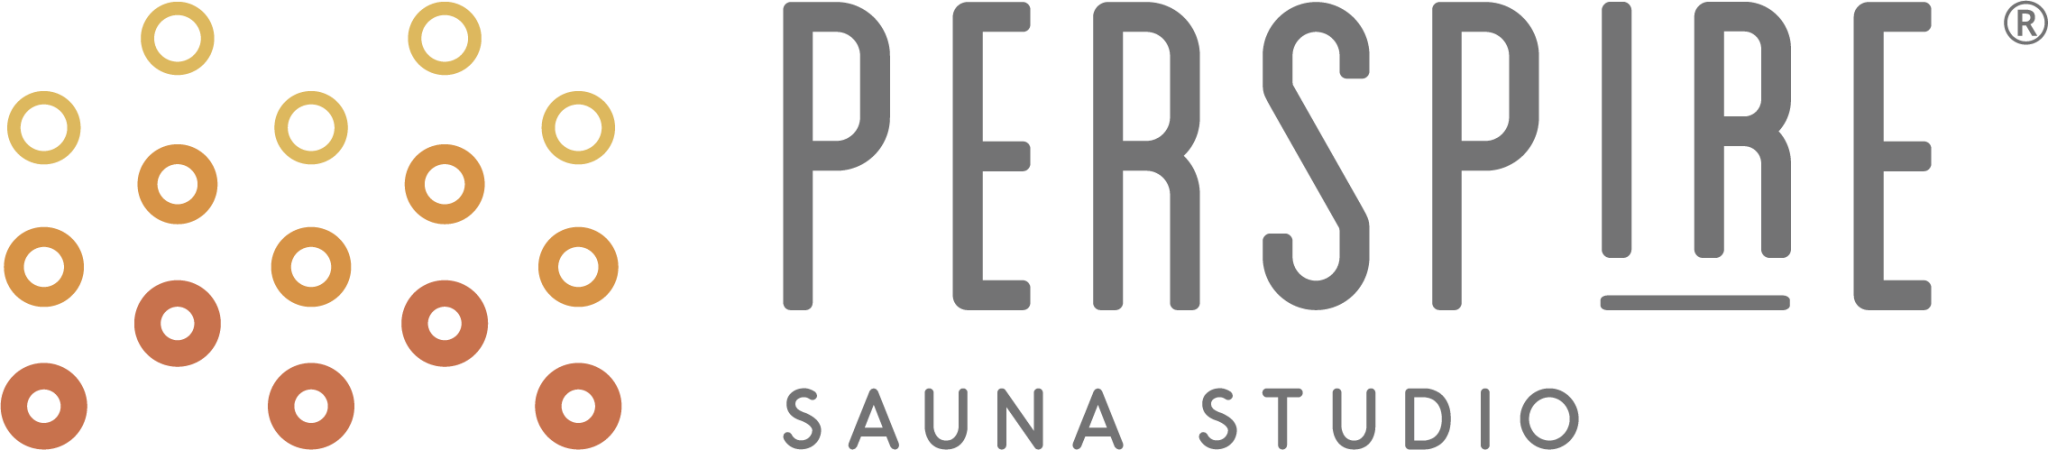 Perspire Sauna Studio logo